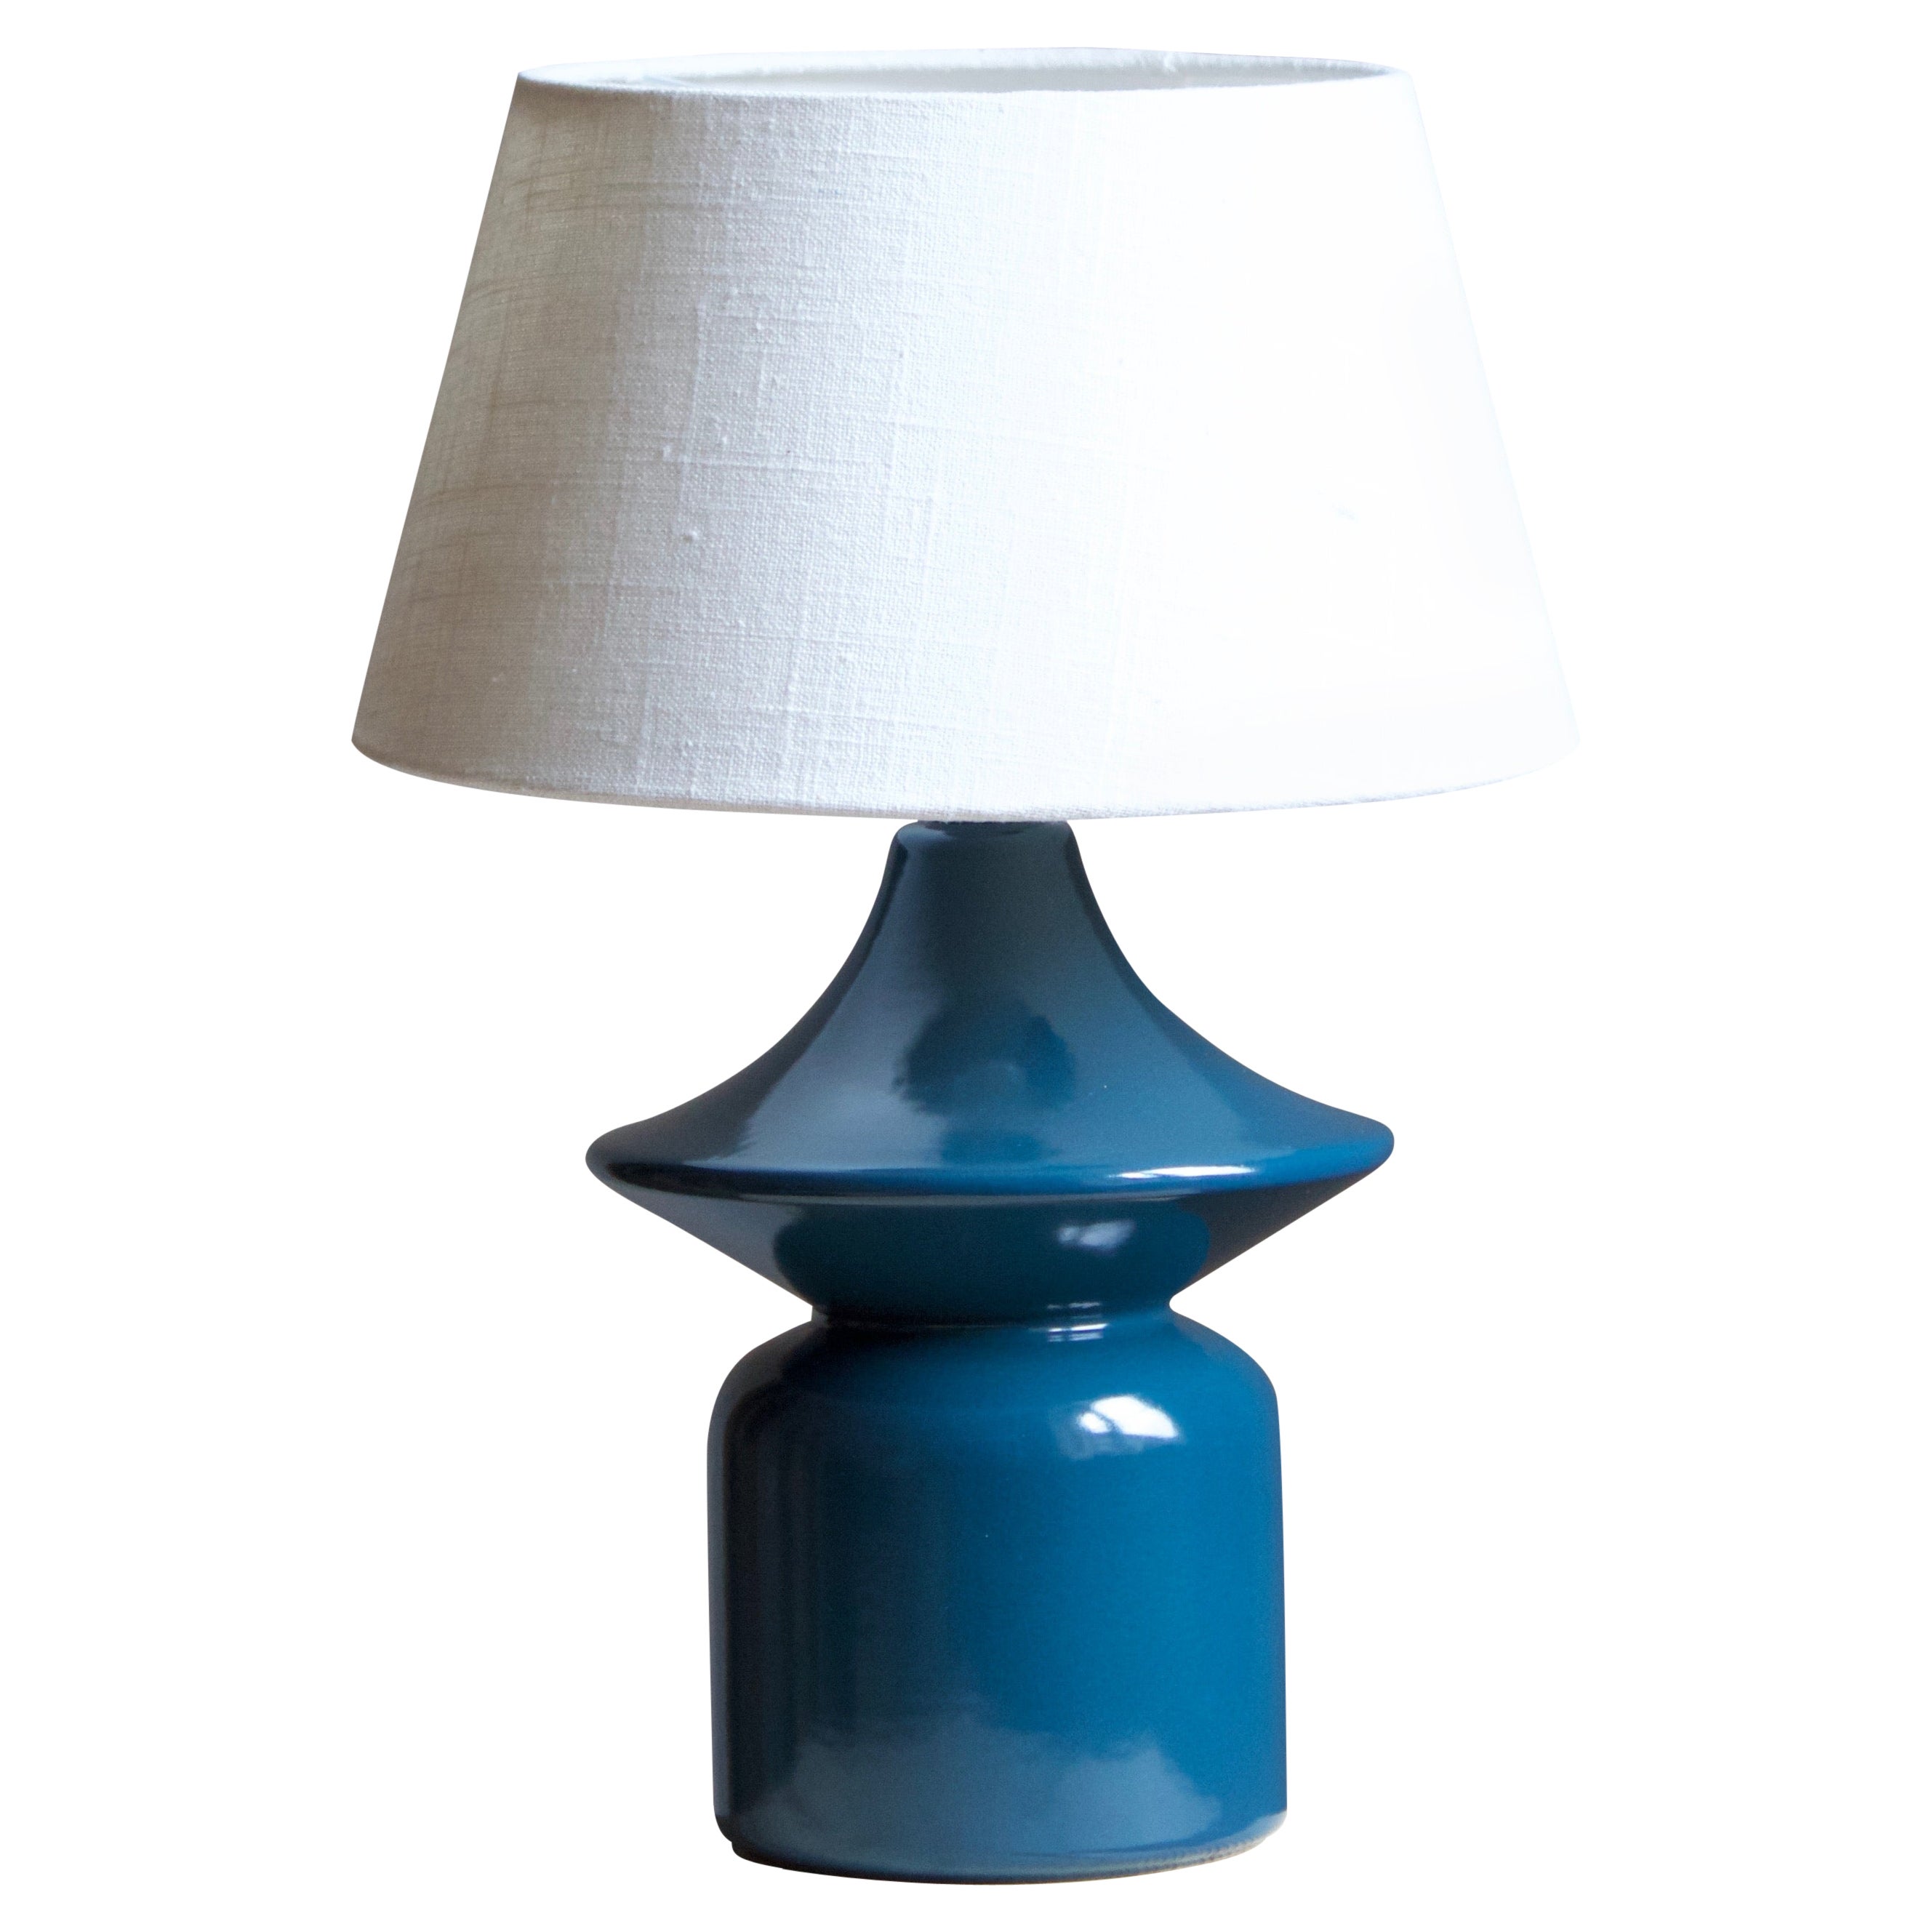 Hasle Keramik, Table Lamp, Blue Glazed Stoneware, Bornholm, Denmark, 1960s